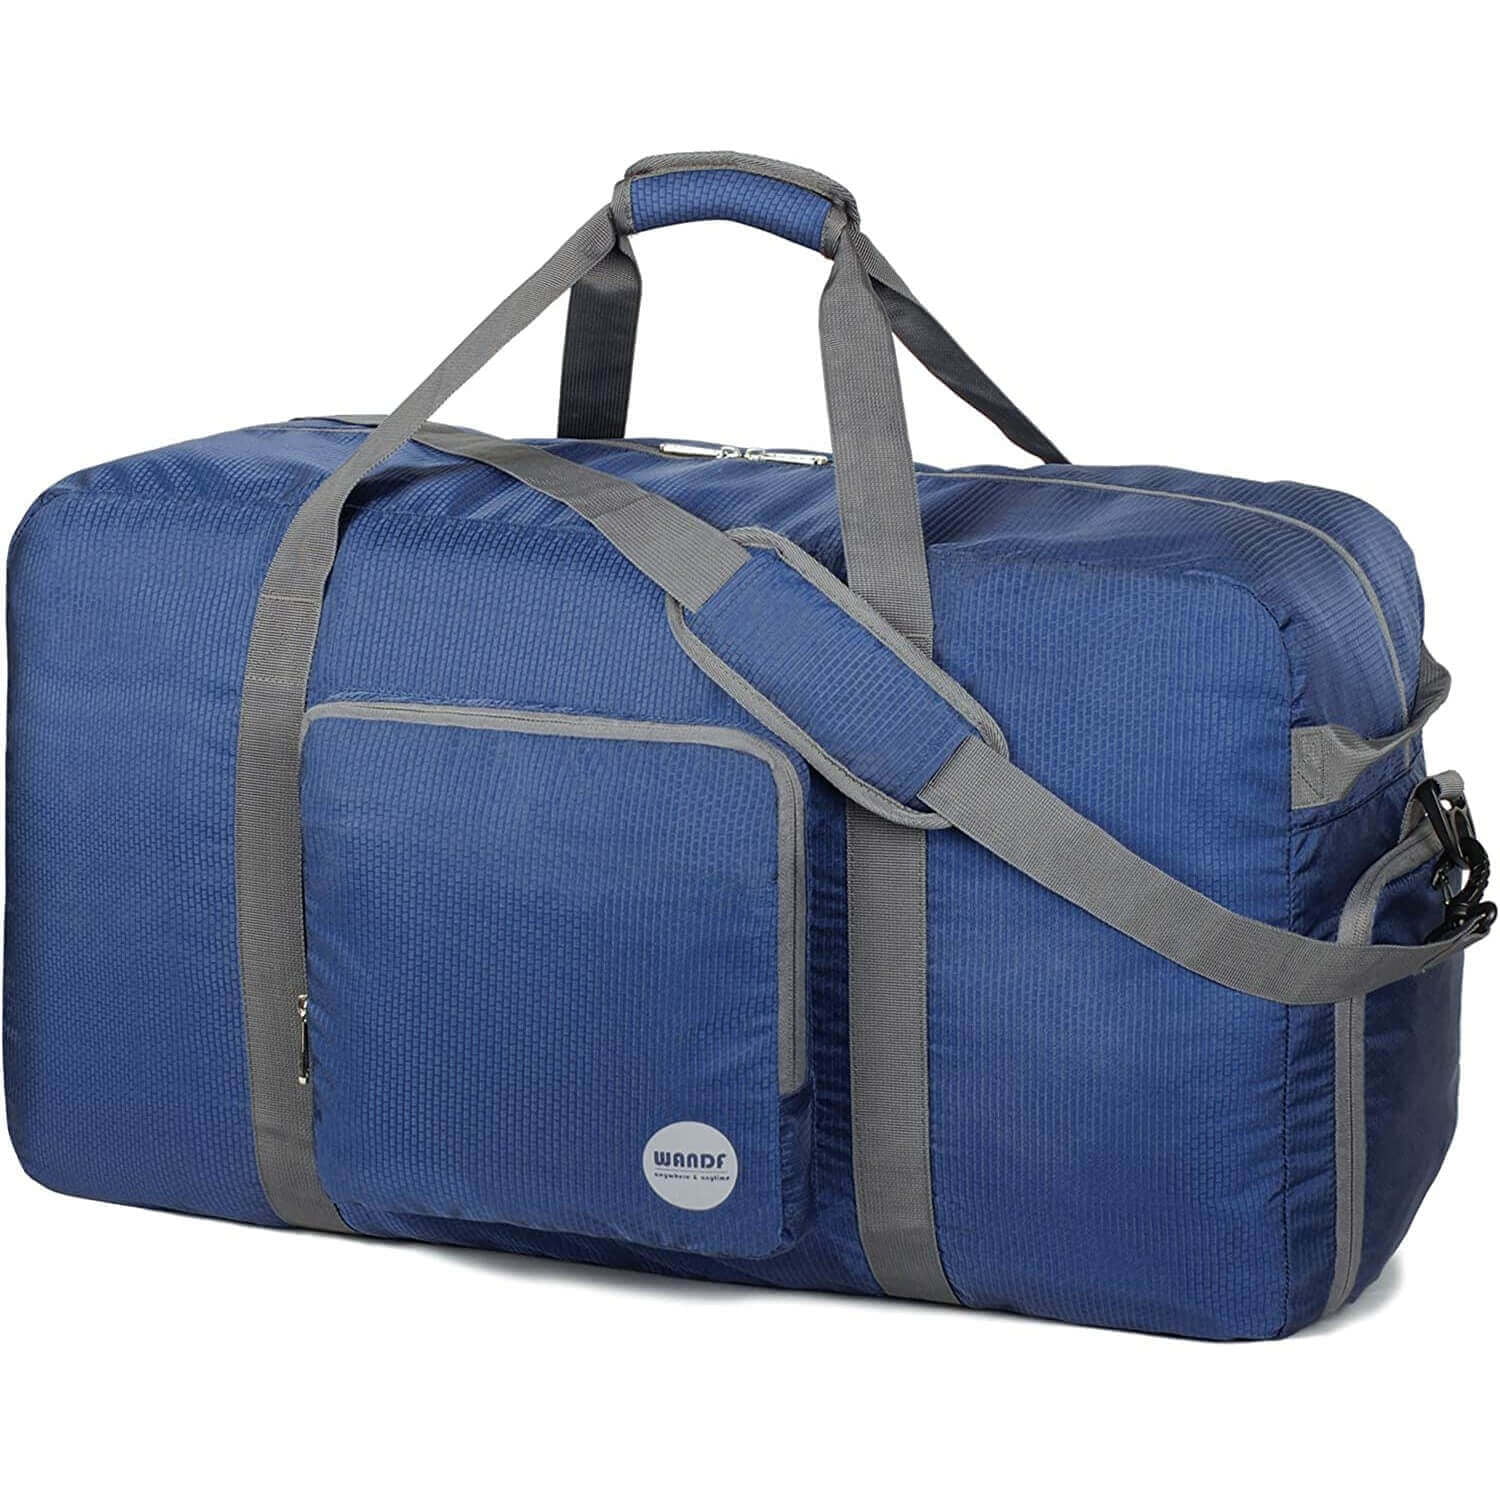 WANDF Foldable Lightweight Luggage Duffle Bag 28